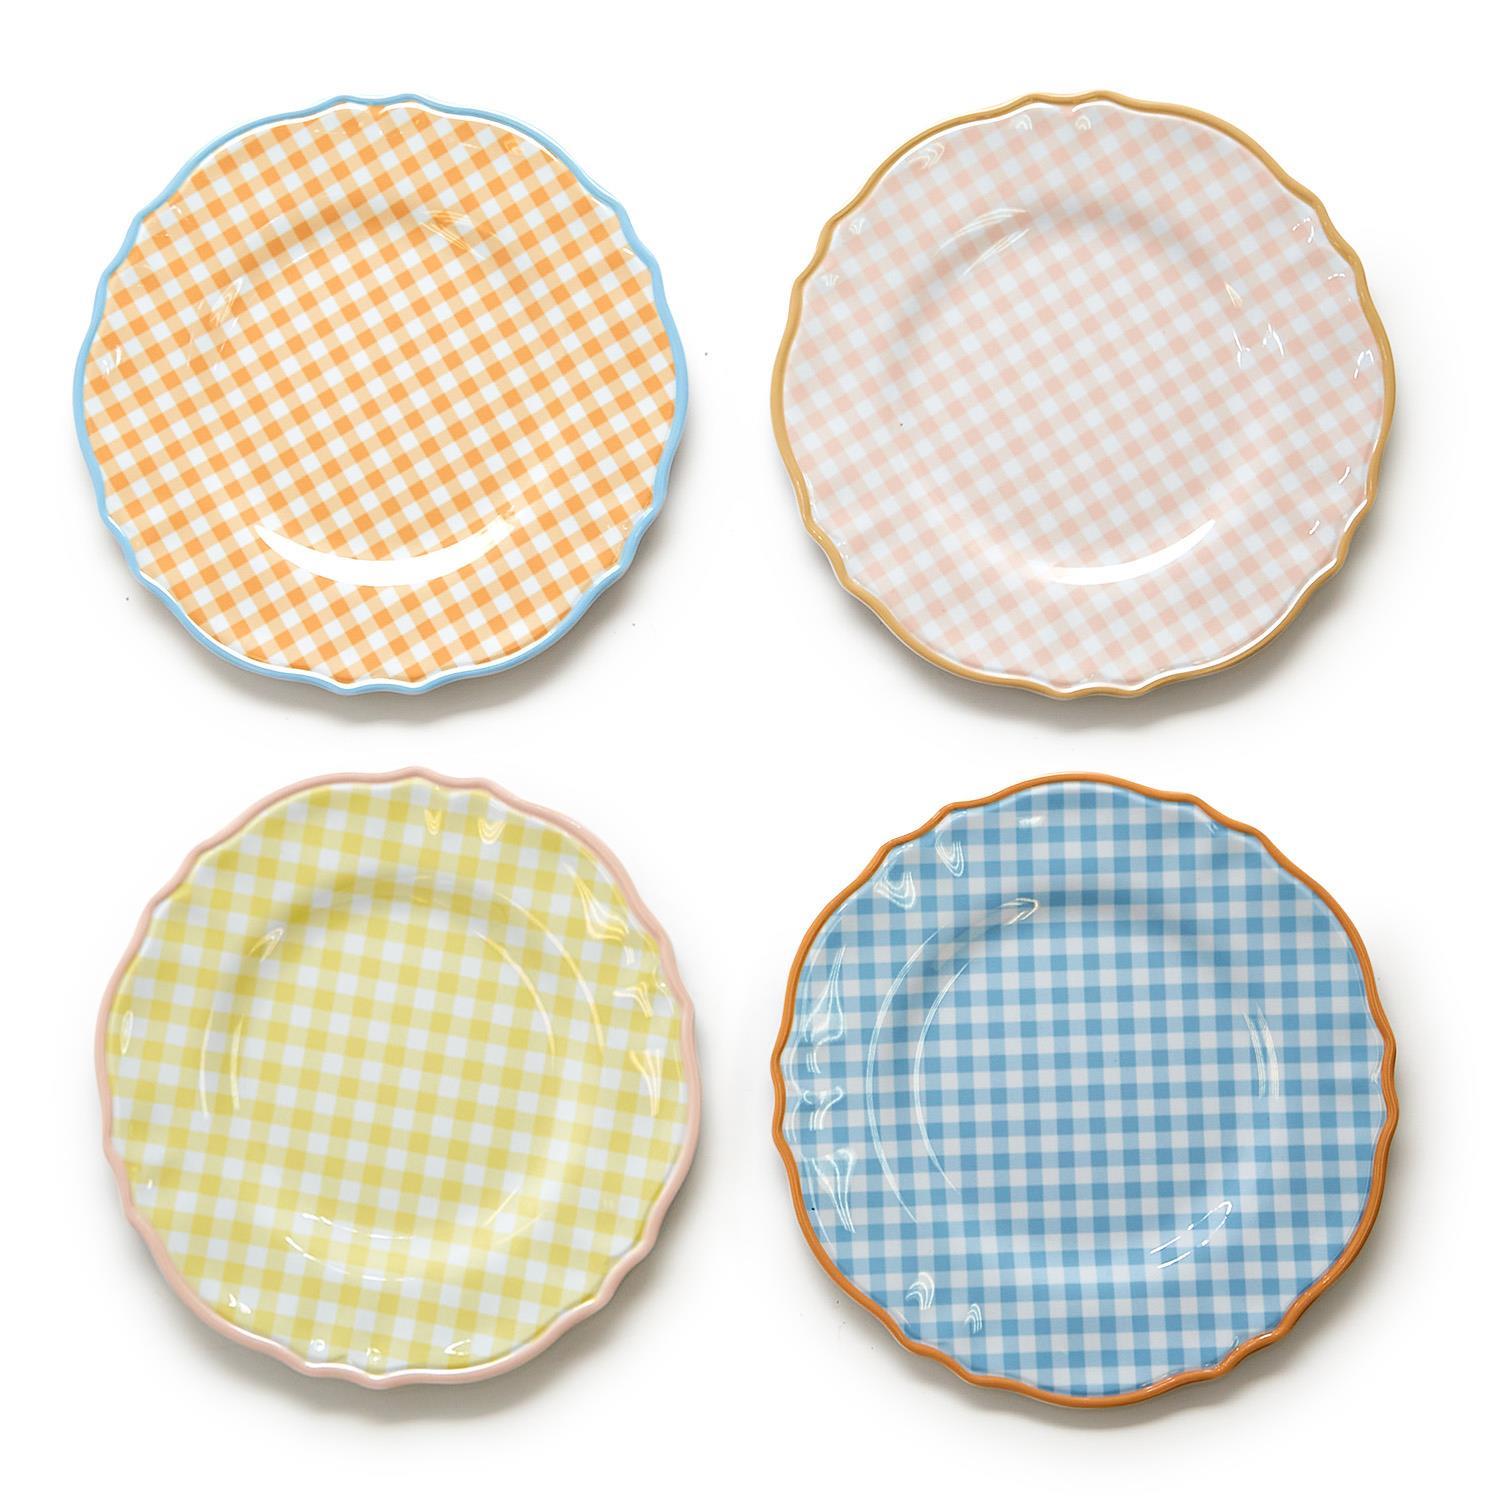 S/4 Gingham Garden Melamine Dinner Plates Includes 4 Colors